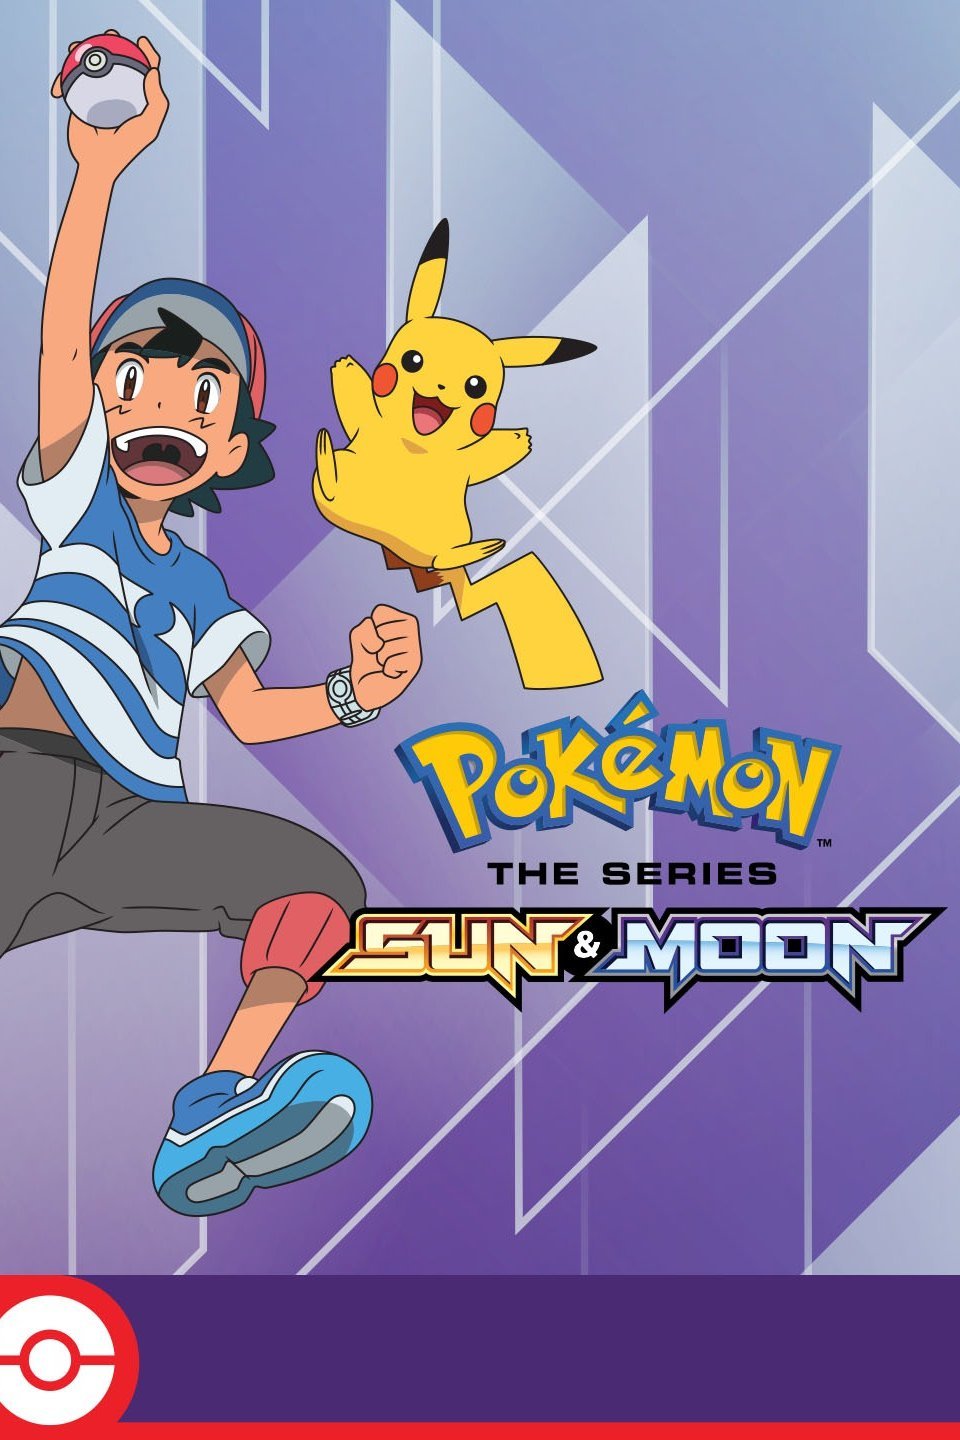 Games reviews roundup Pokémon Sun and Moon Playstation 4 Pro Mekazoo   Games  The Guardian